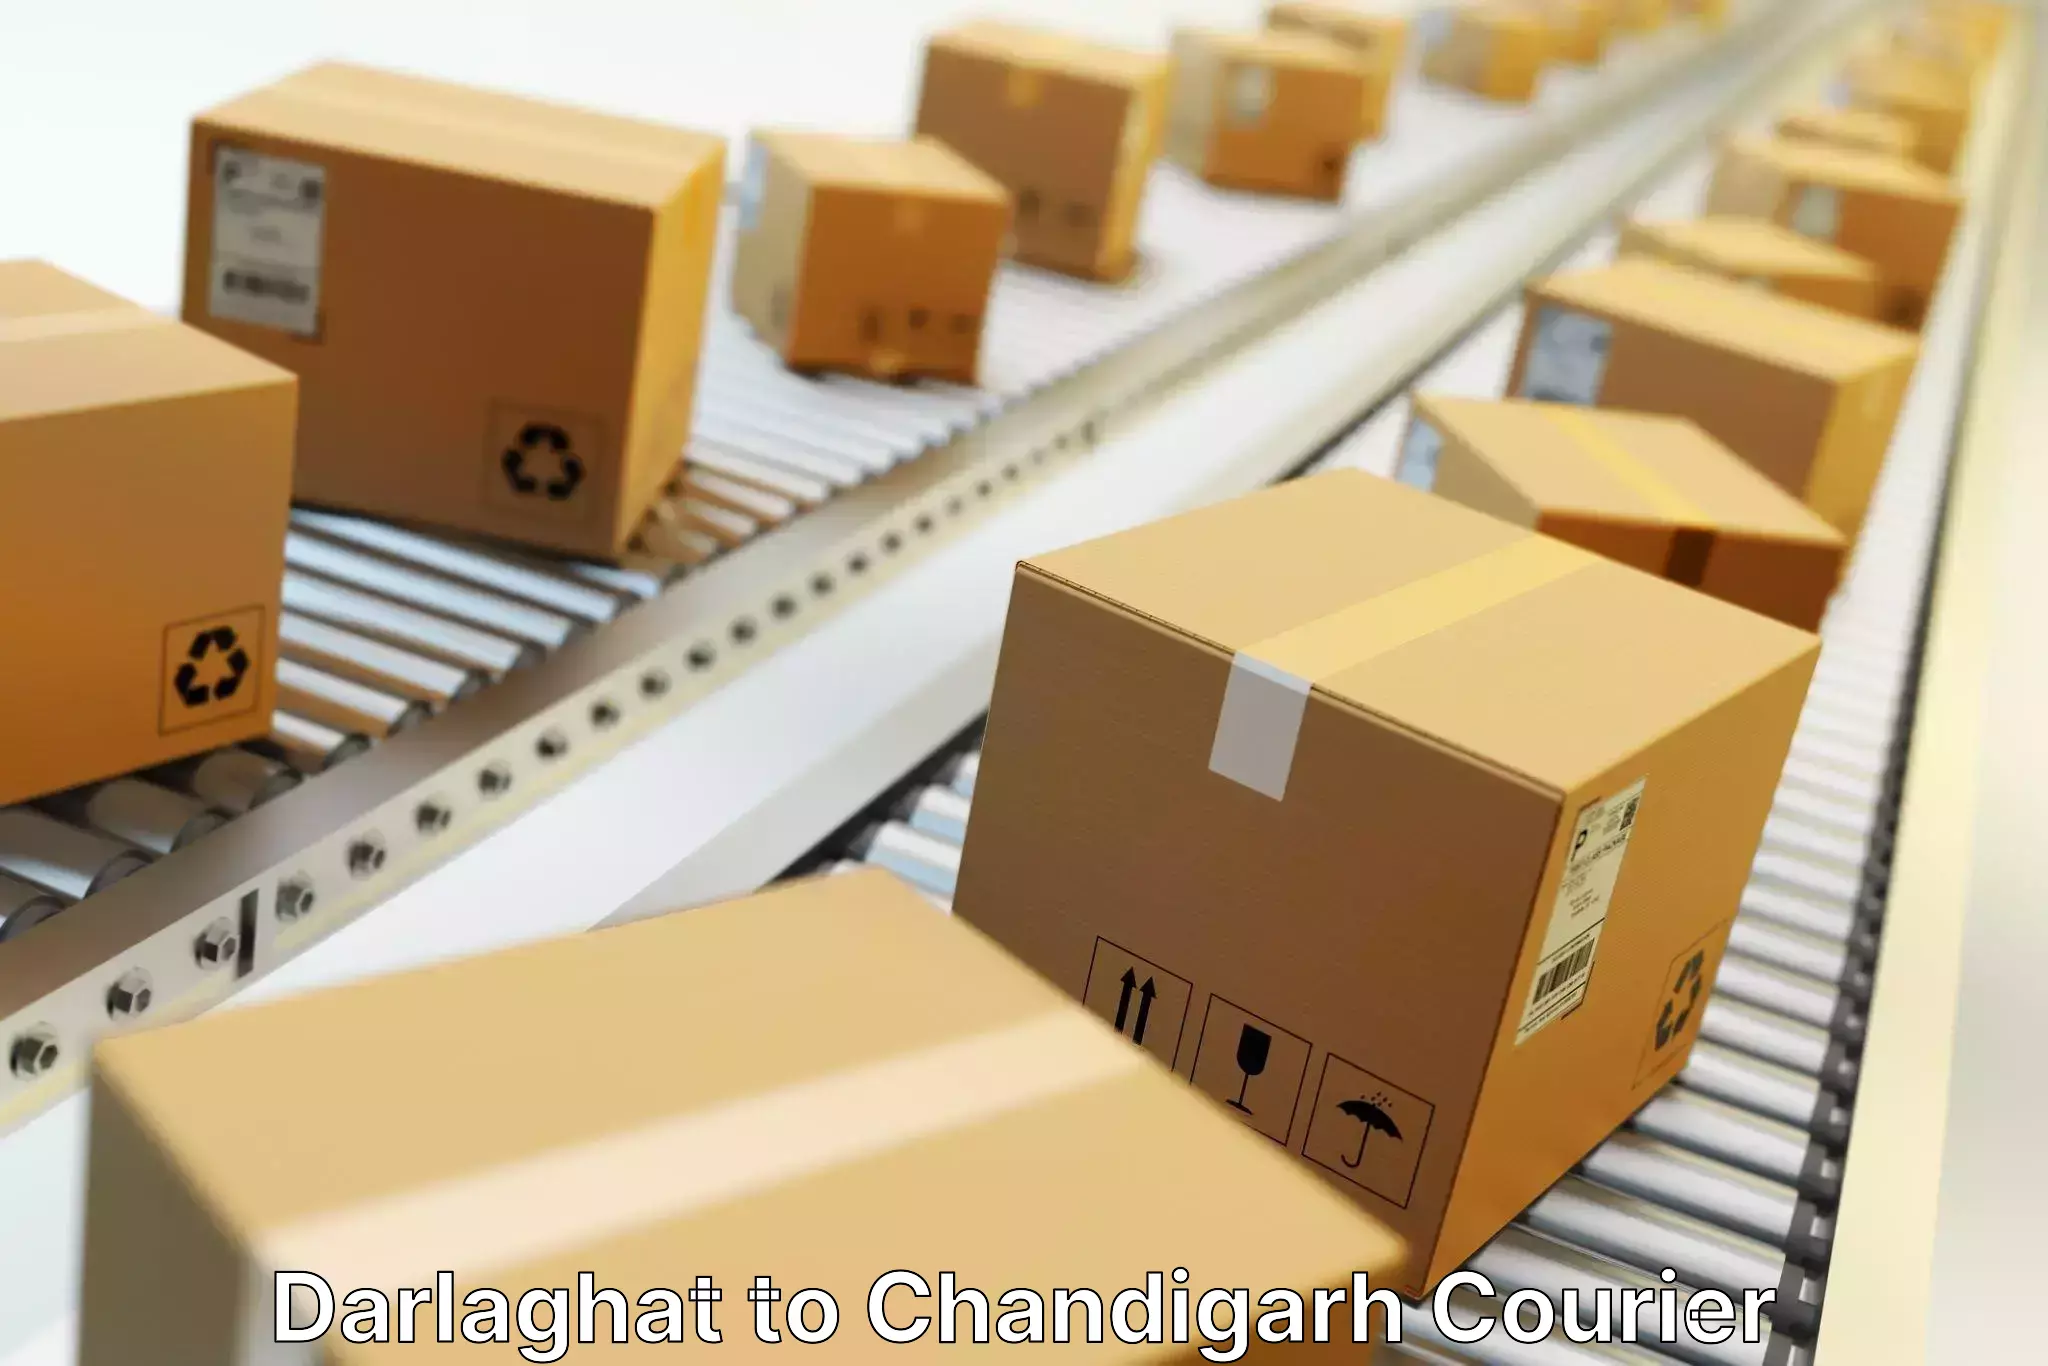 Logistics service provider Darlaghat to Chandigarh